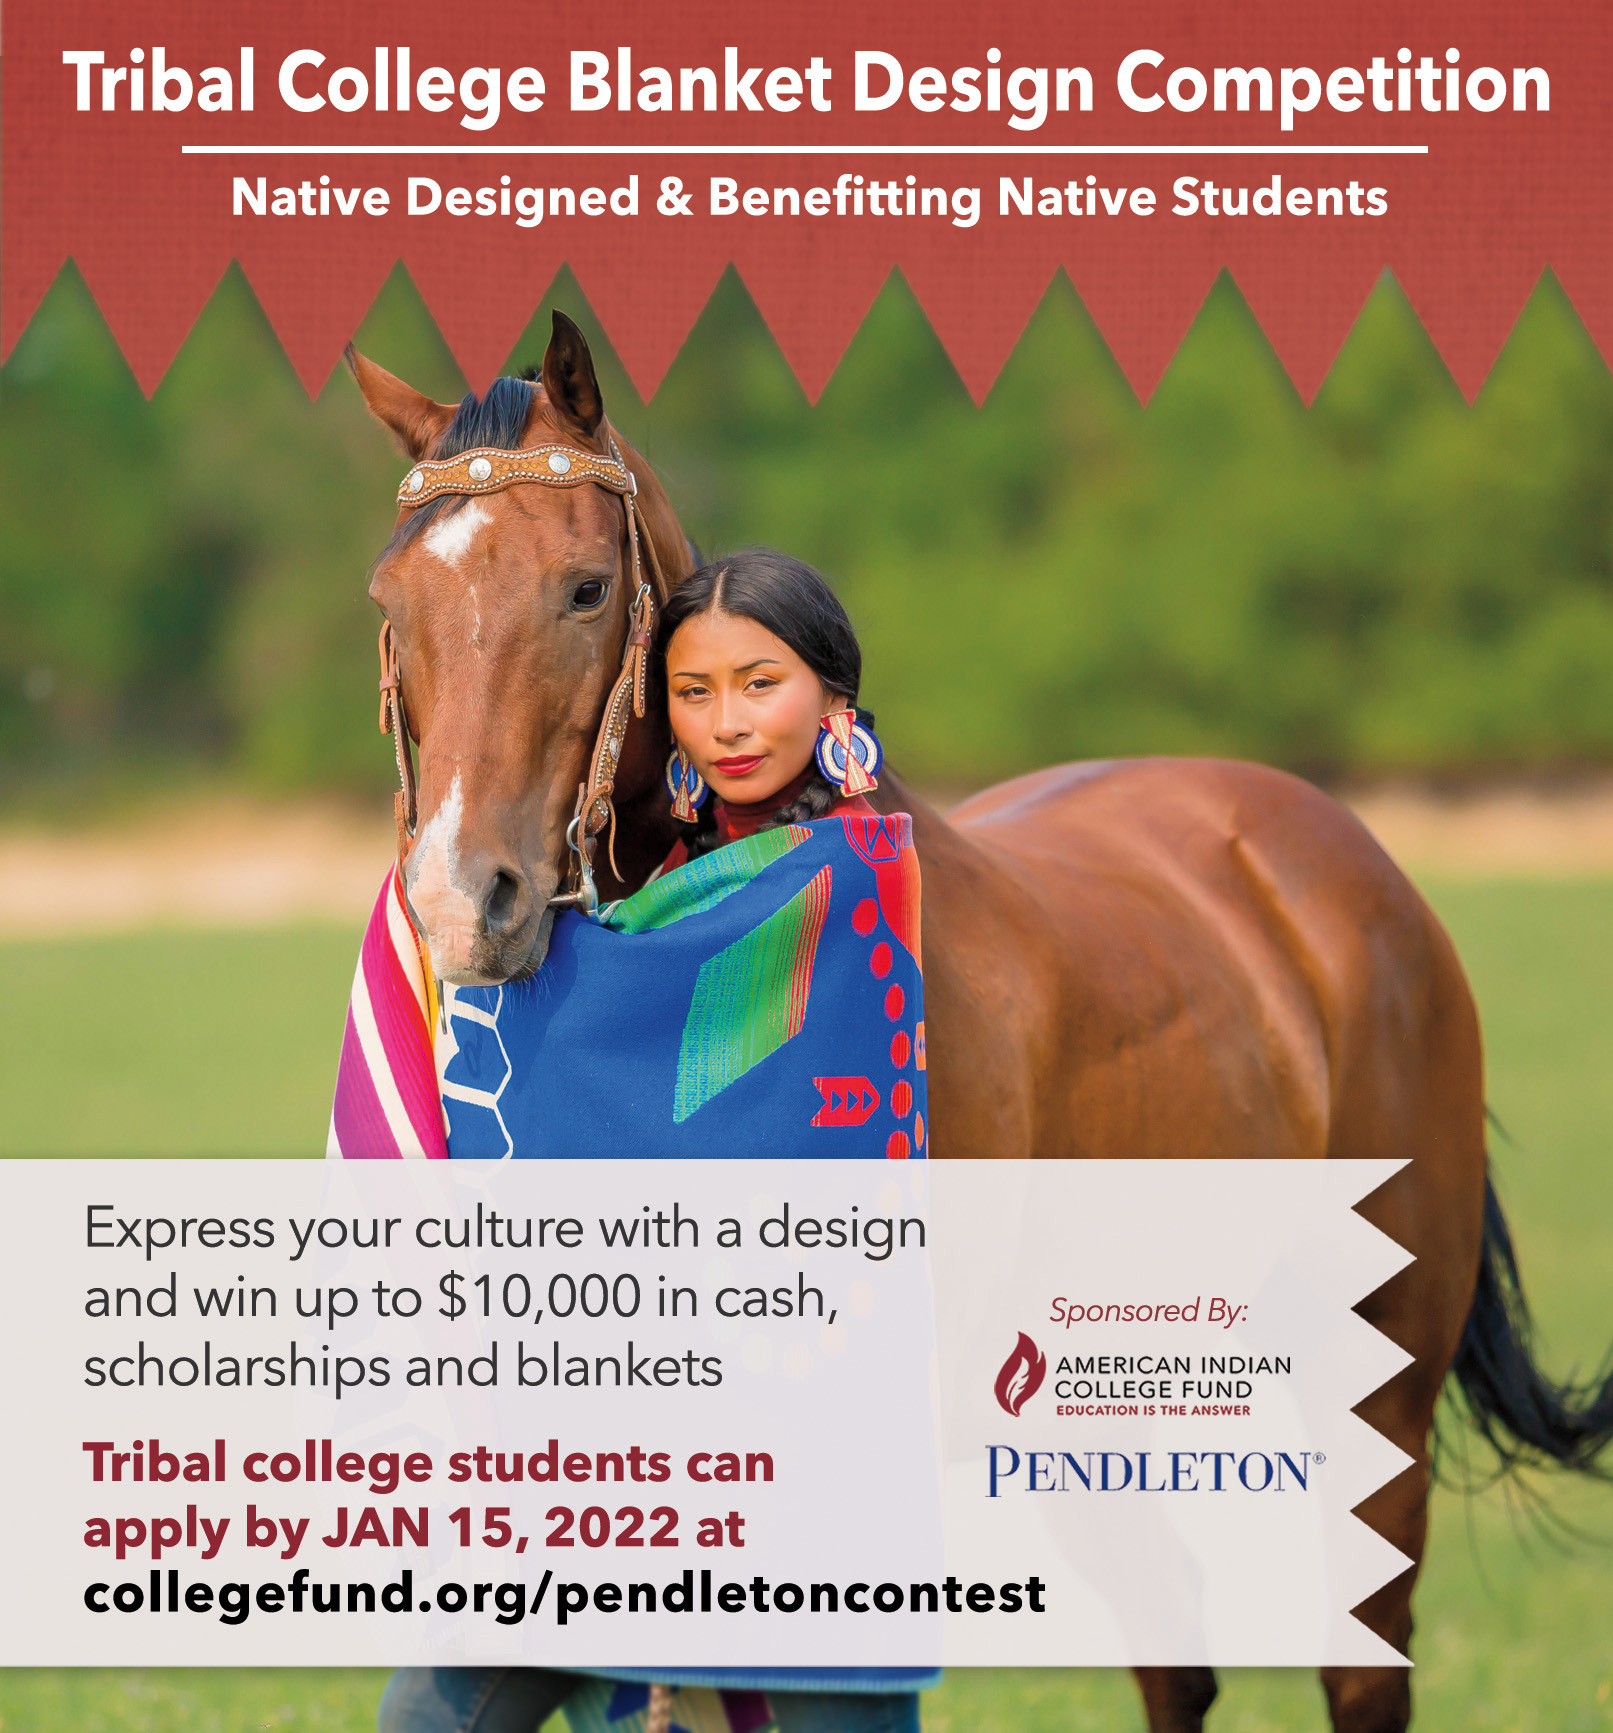 Pendleton Tribal College Blanket Design Competition 